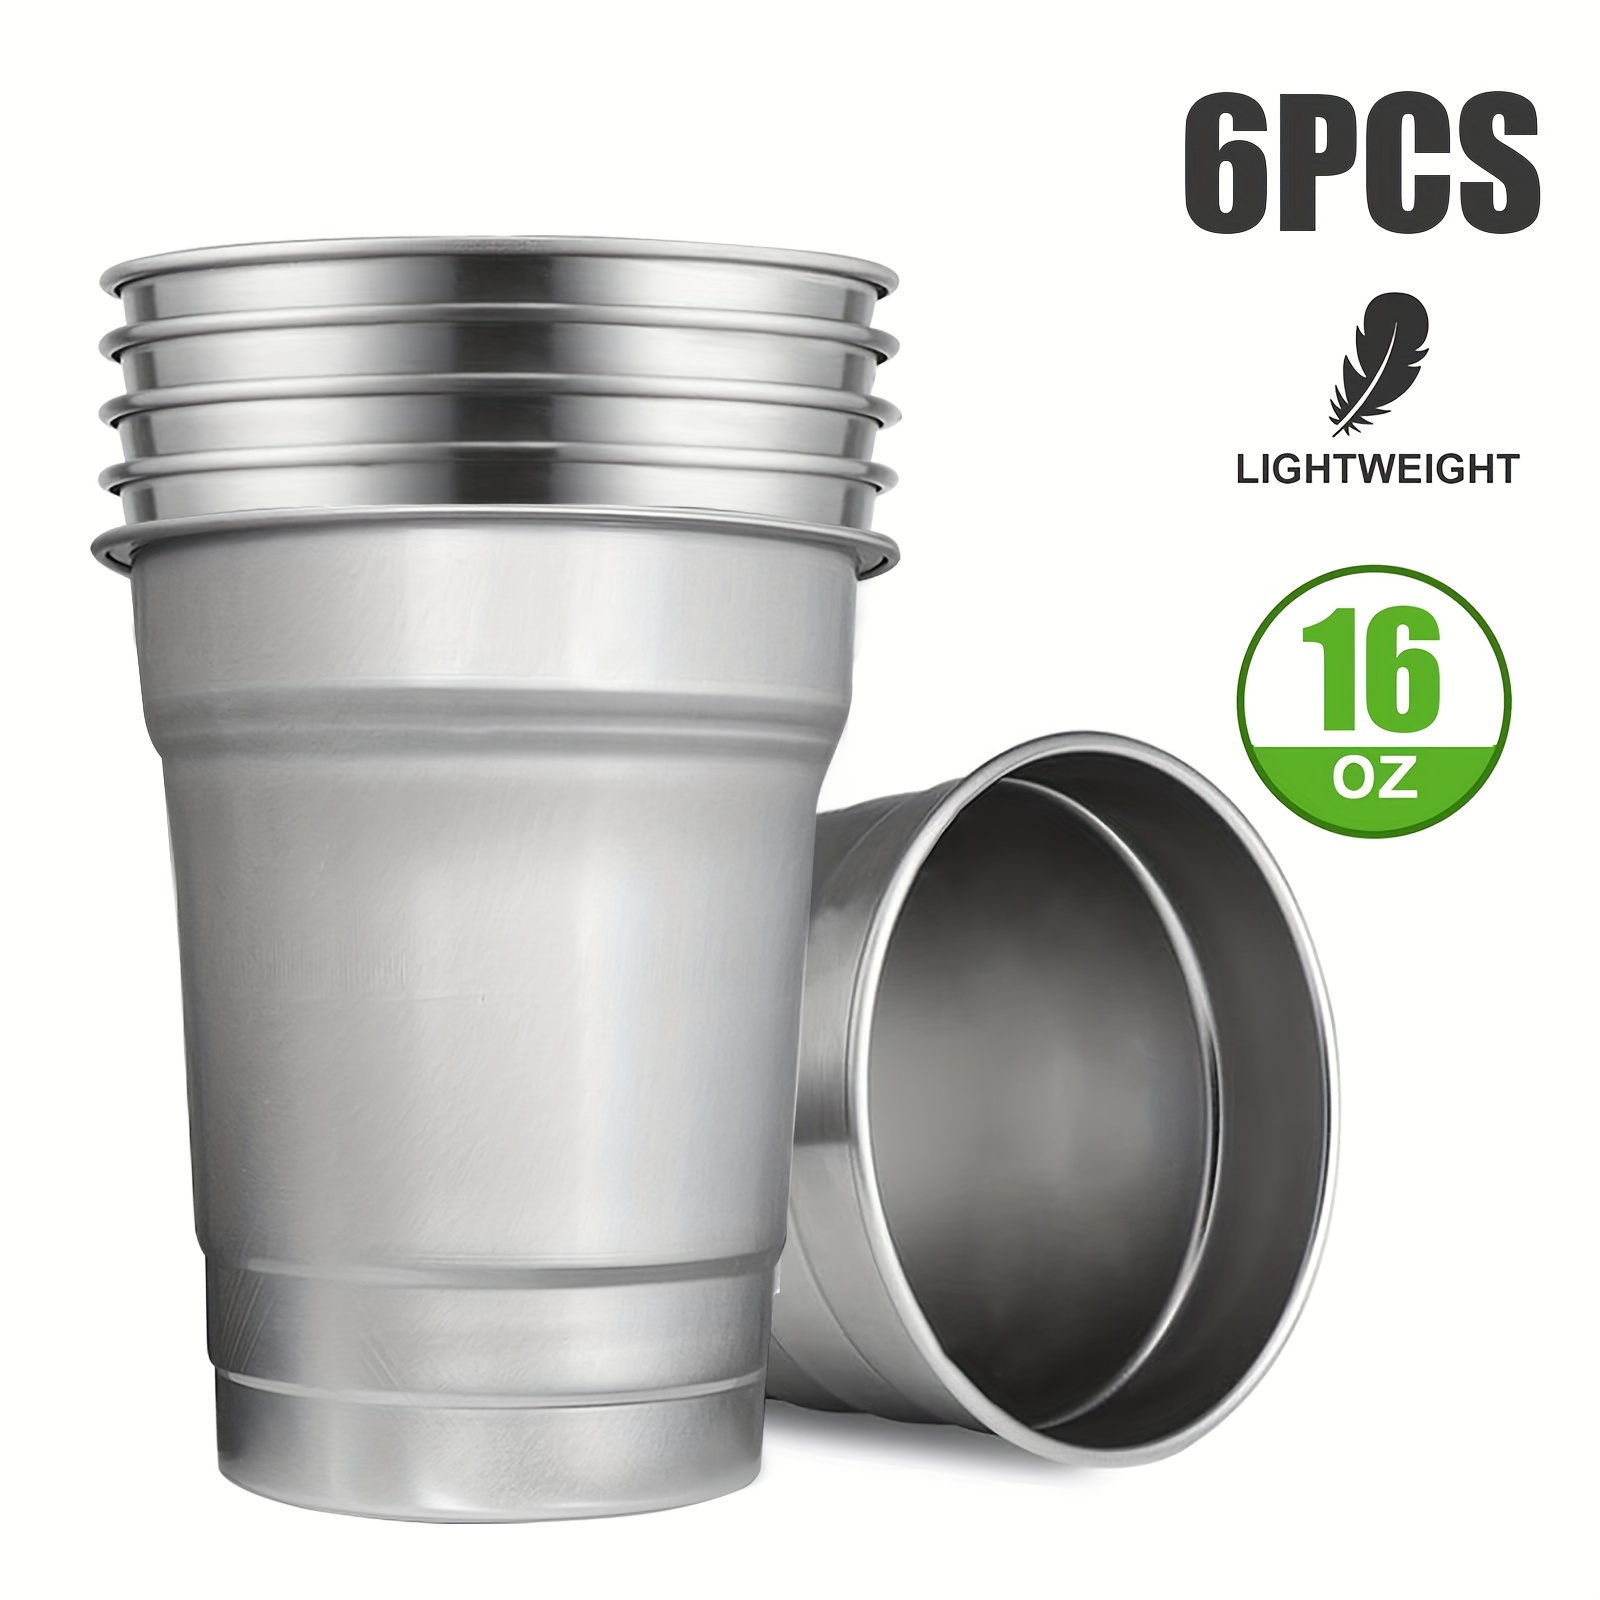 Ball Aluminum Cups 16 oz